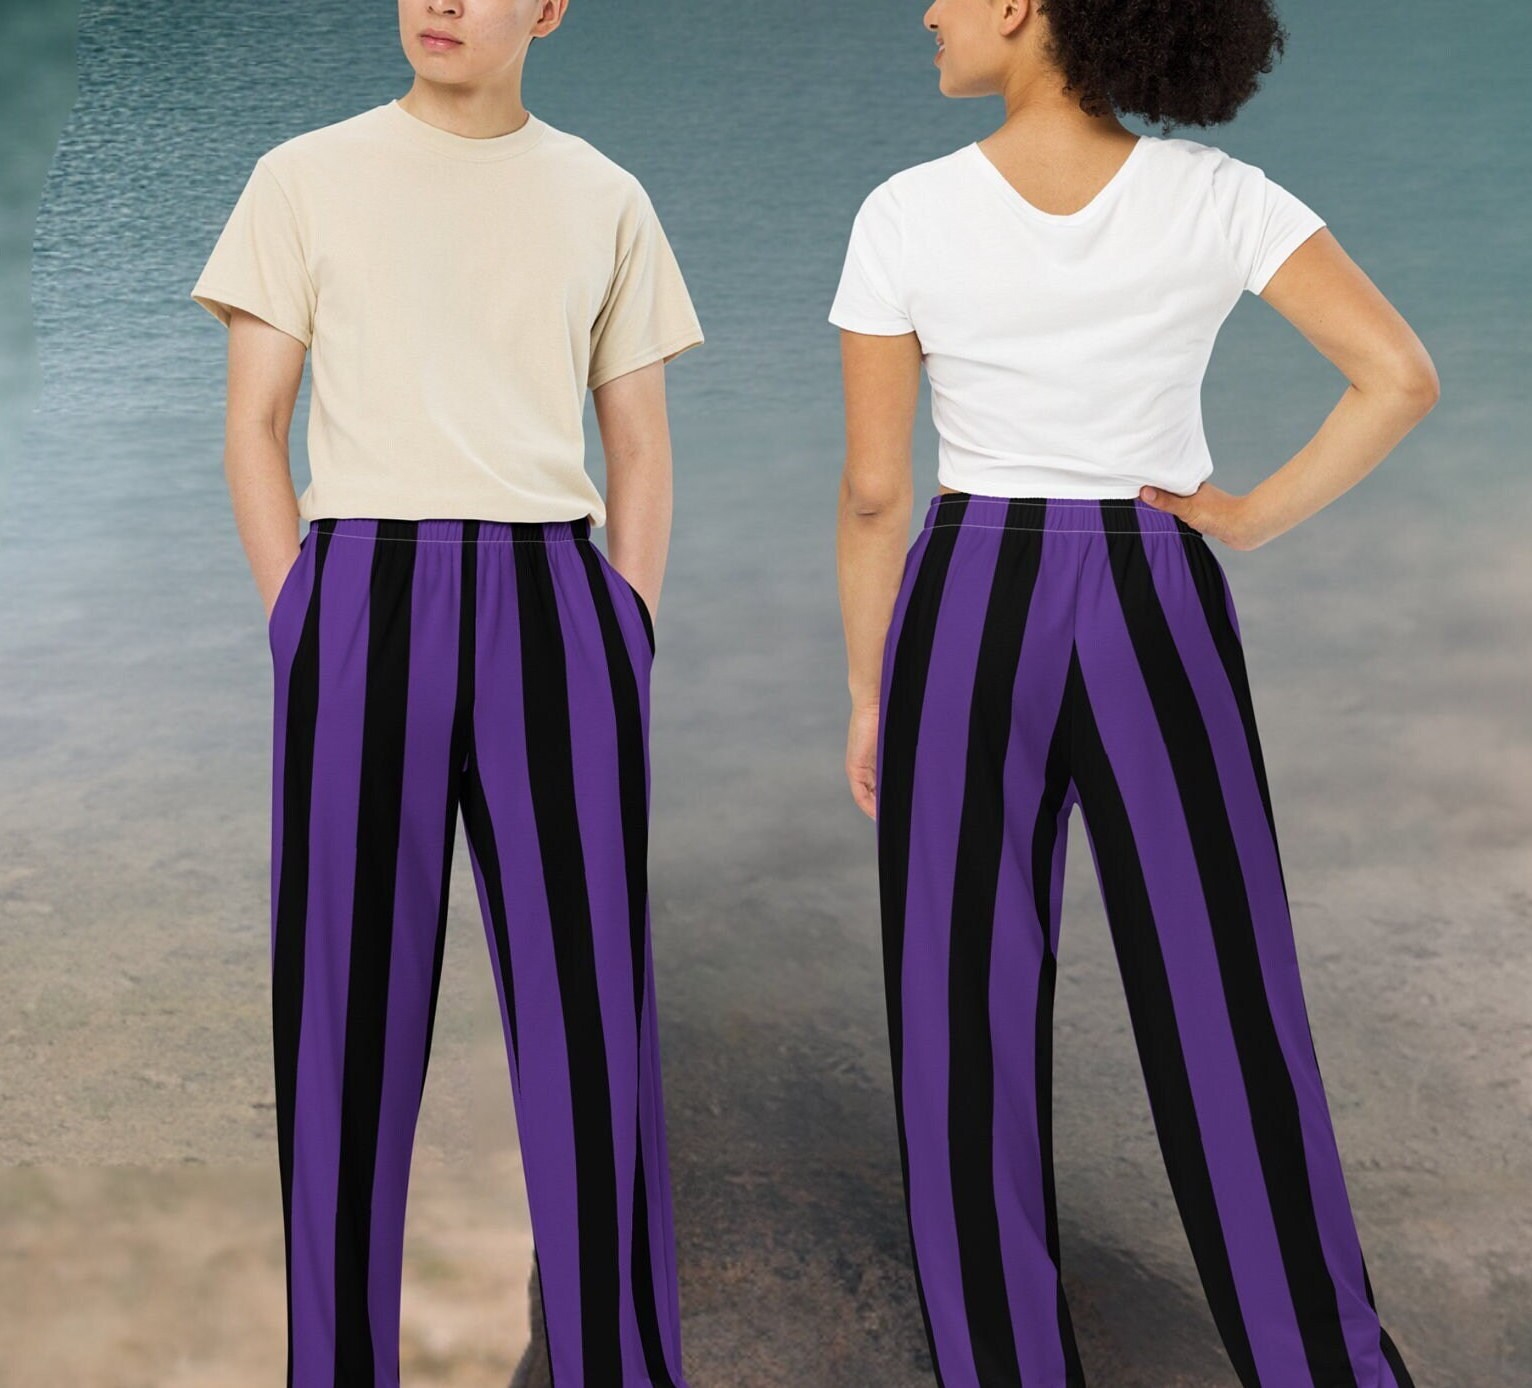 Wantschun Womens Wide Leg Pajama Pants Satin Silk Casual Loose Elastic  Waist Lounge Pants Pj Bottoms at  Women’s Clothing store